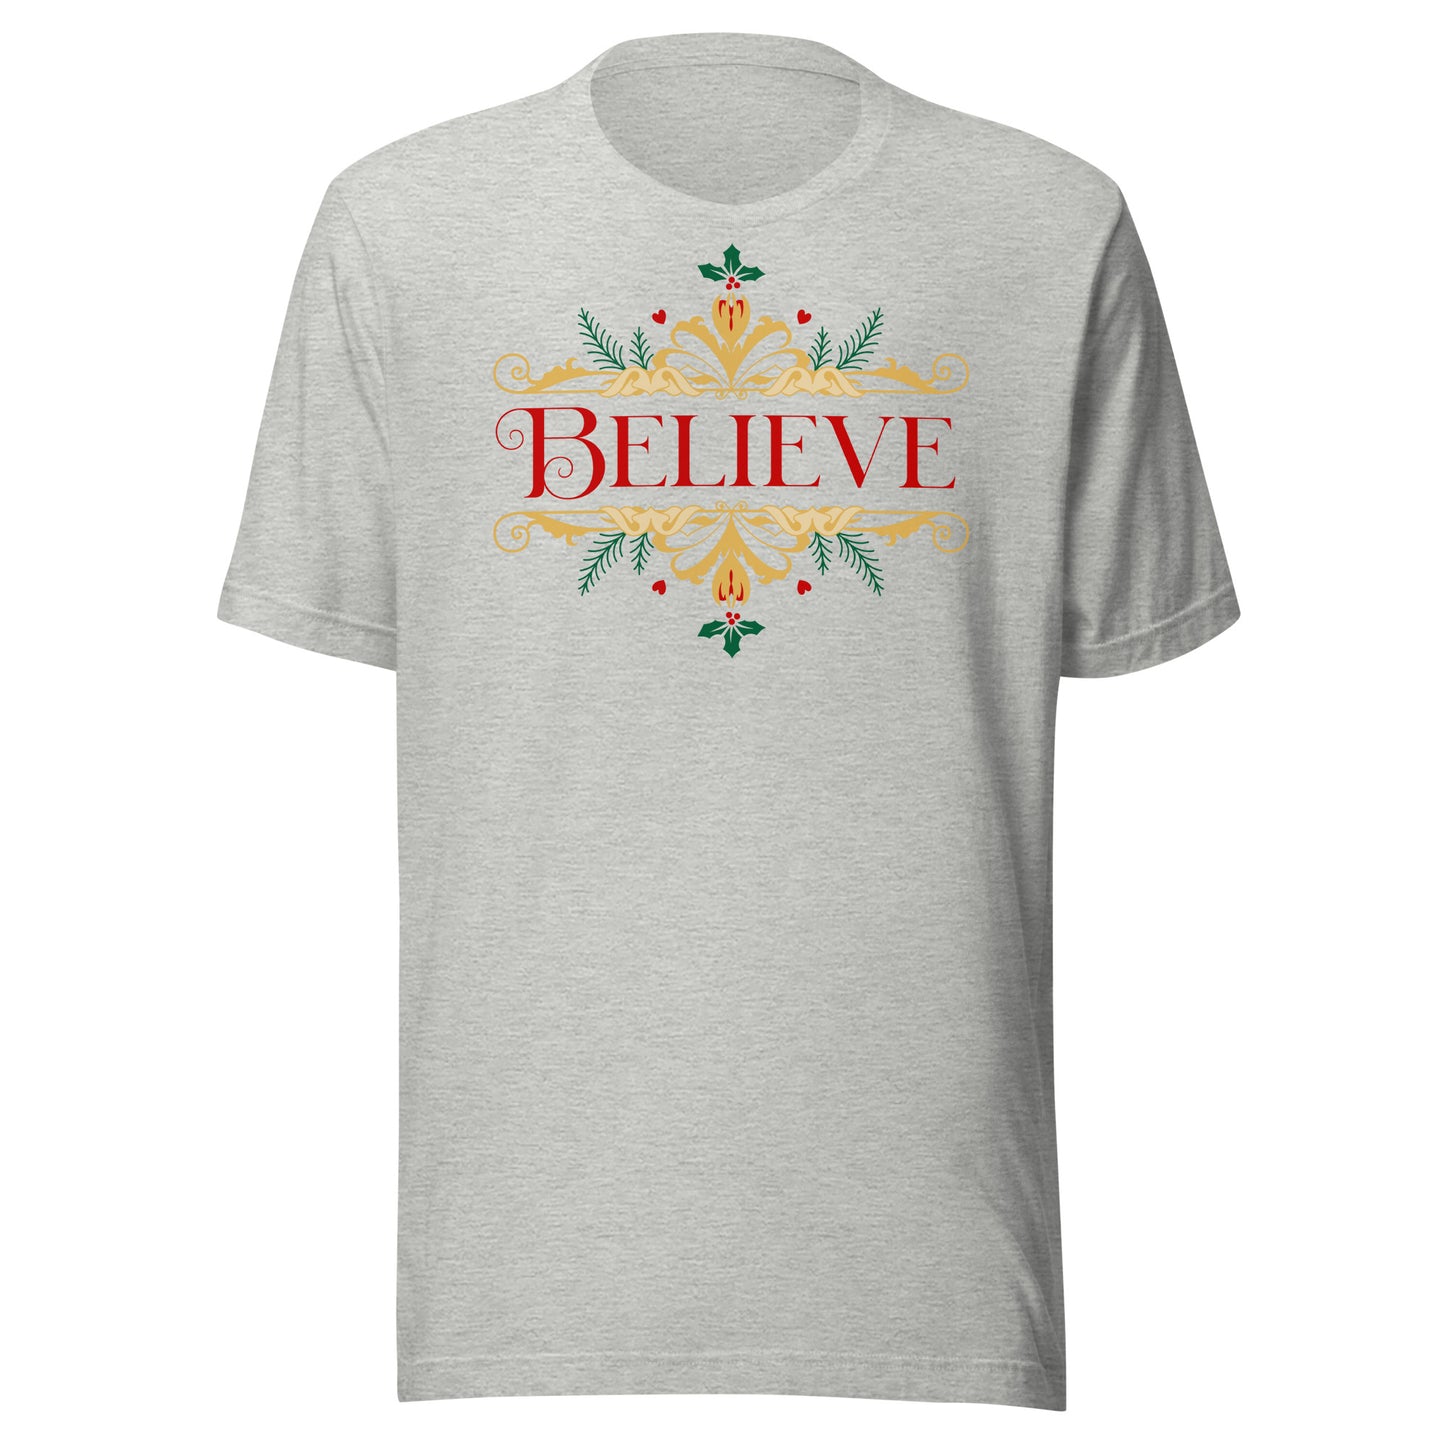 Believe Christmas t-shirt